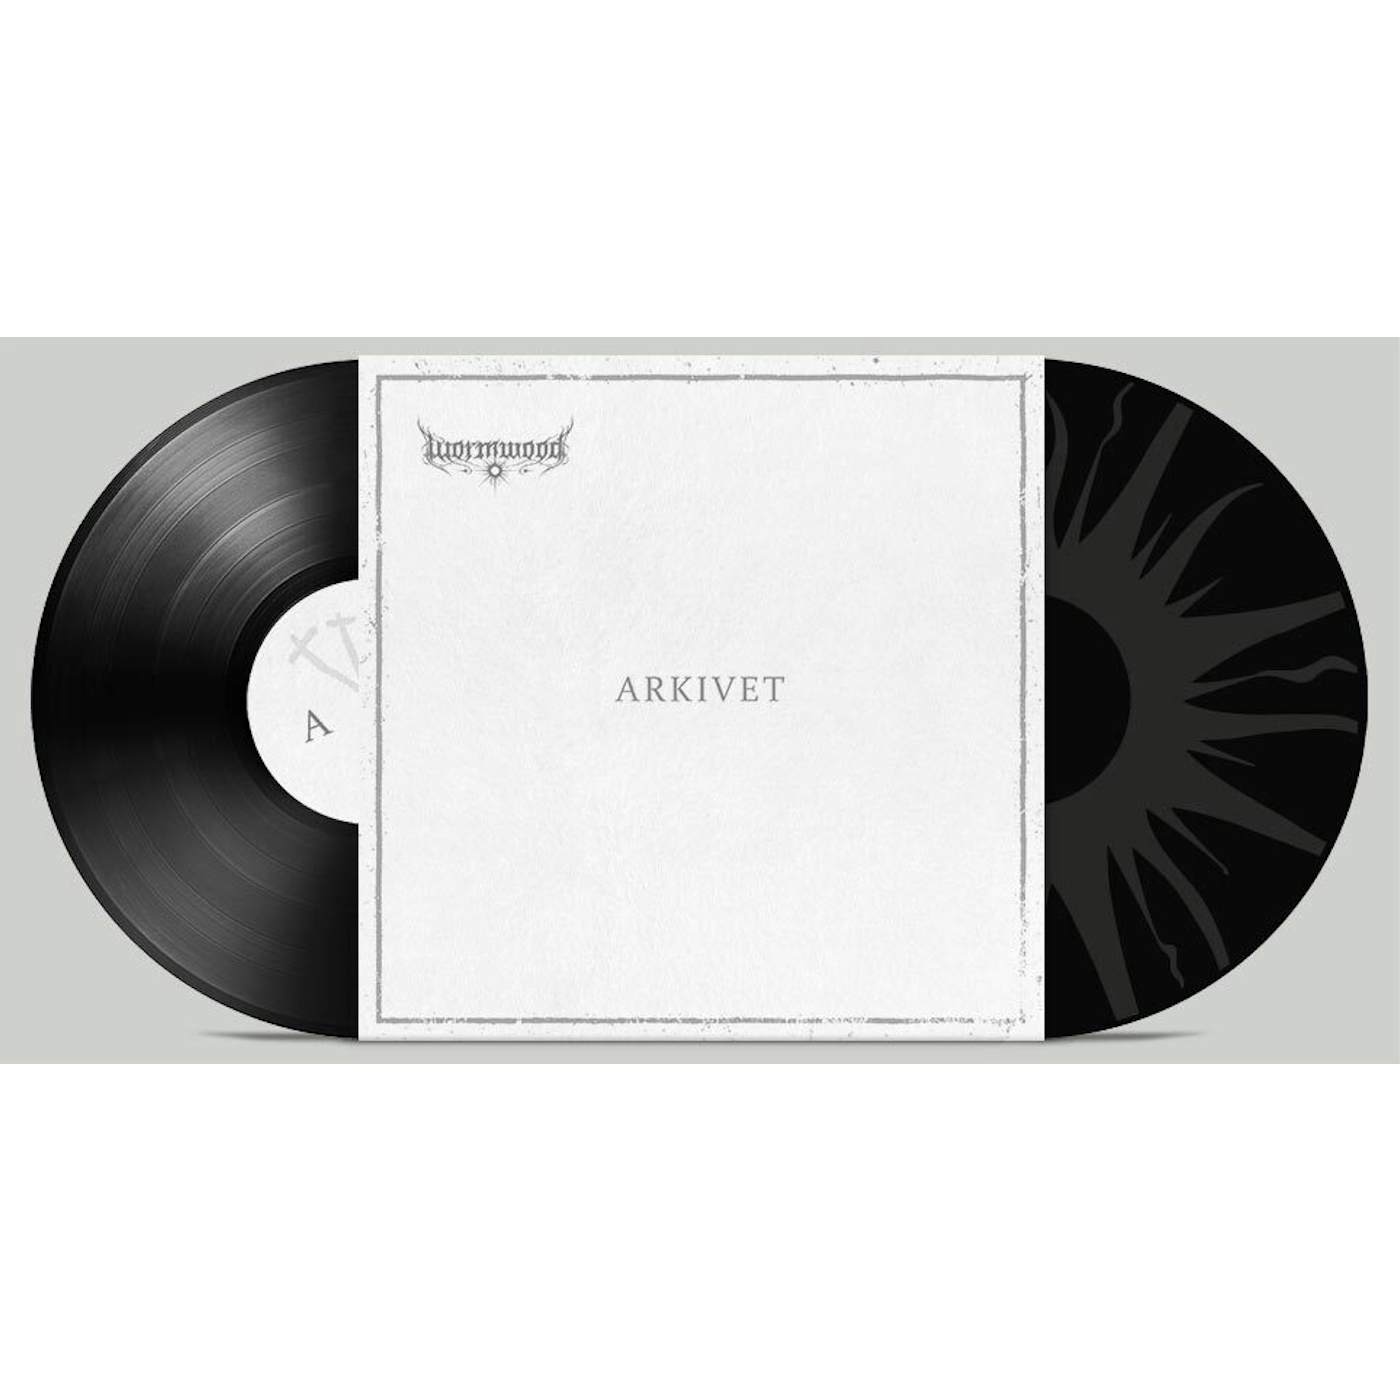 Wormwood Arkivet Vinyl Record